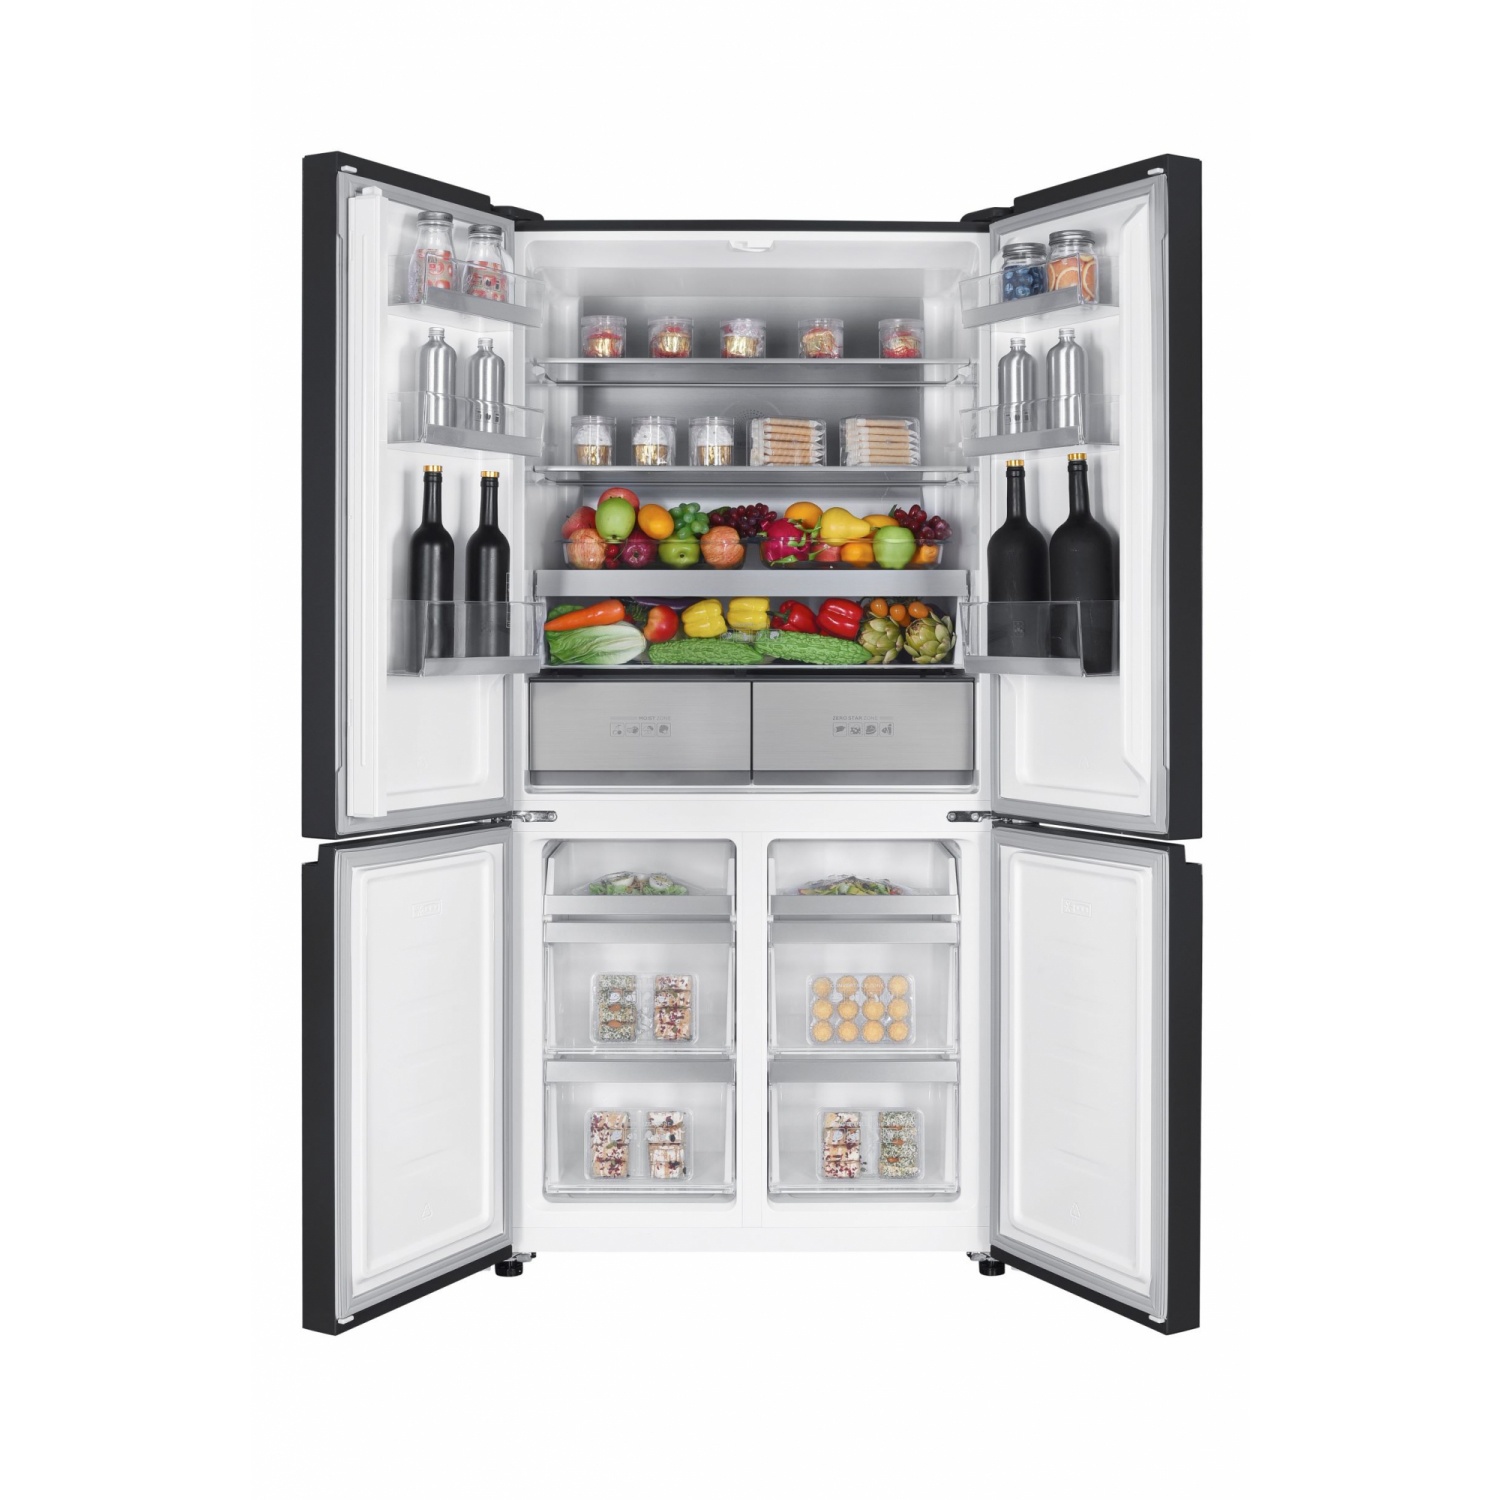 BEKO ตู้เย็น Multi Door ขนาด 18.4 คิว รุ่น GNO51651GBTH สีดำ